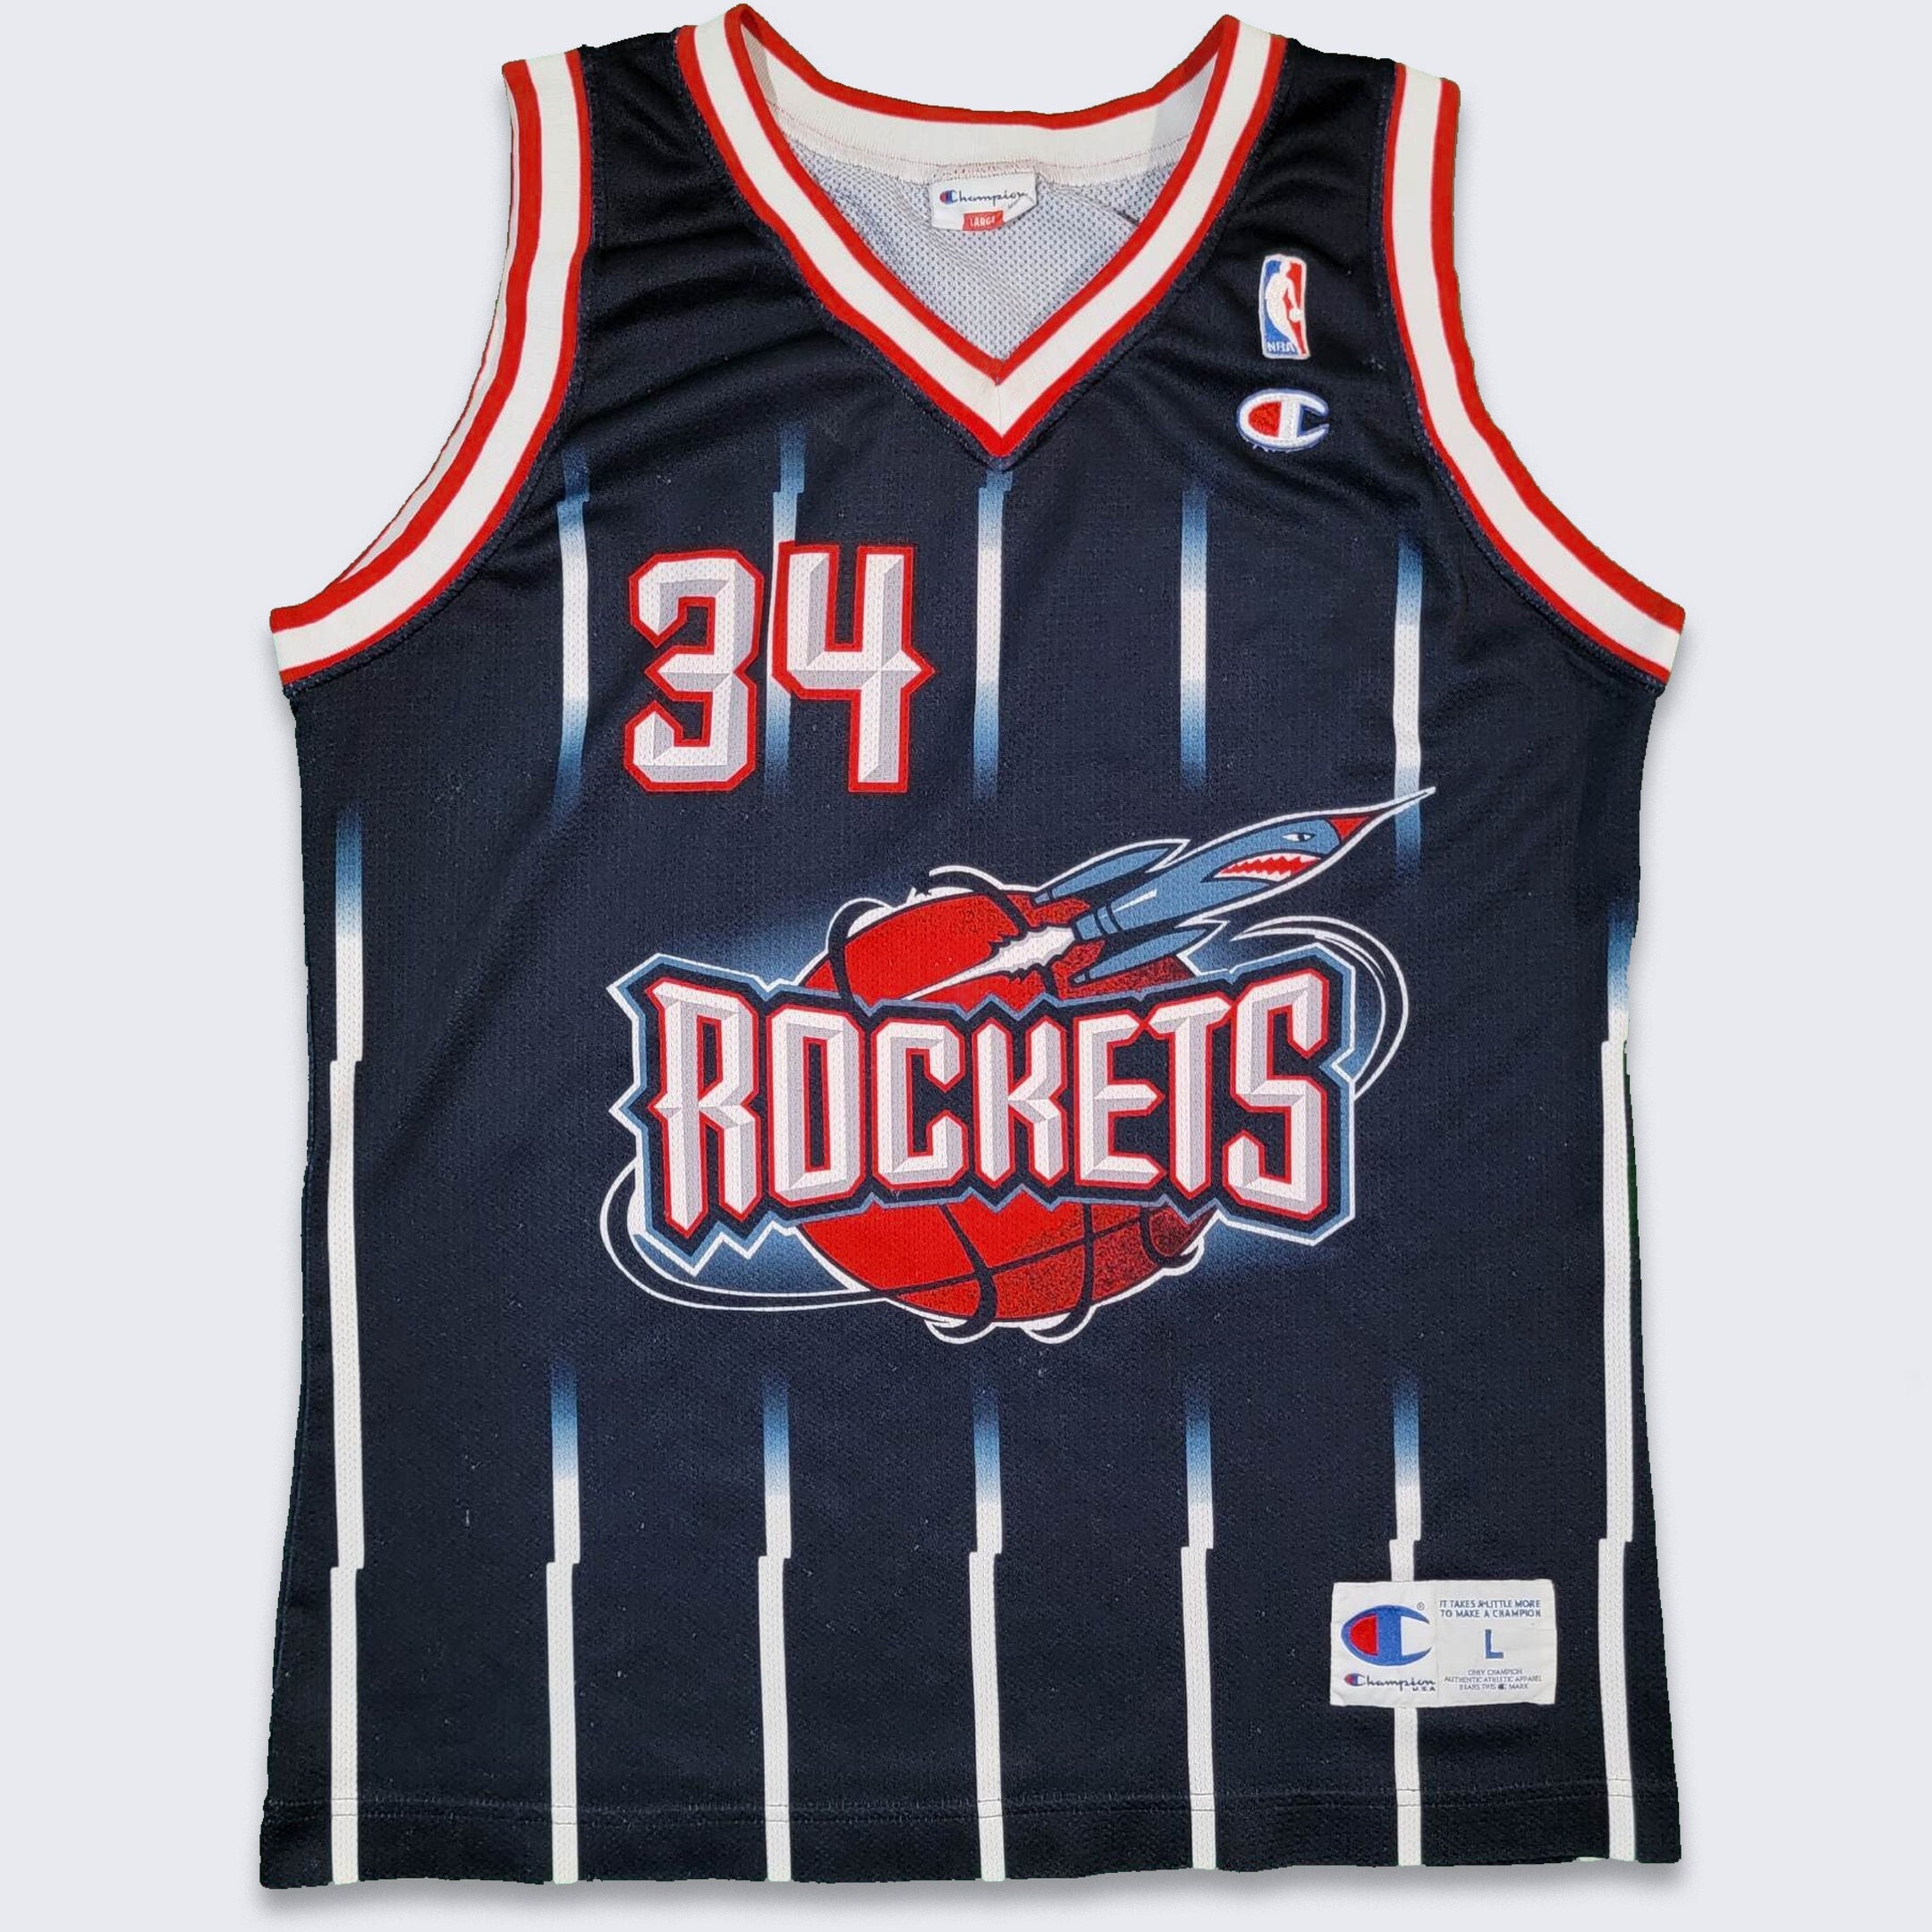 Nike NBA Houston Rockets James Harden #13 Jersey Size XL. 50